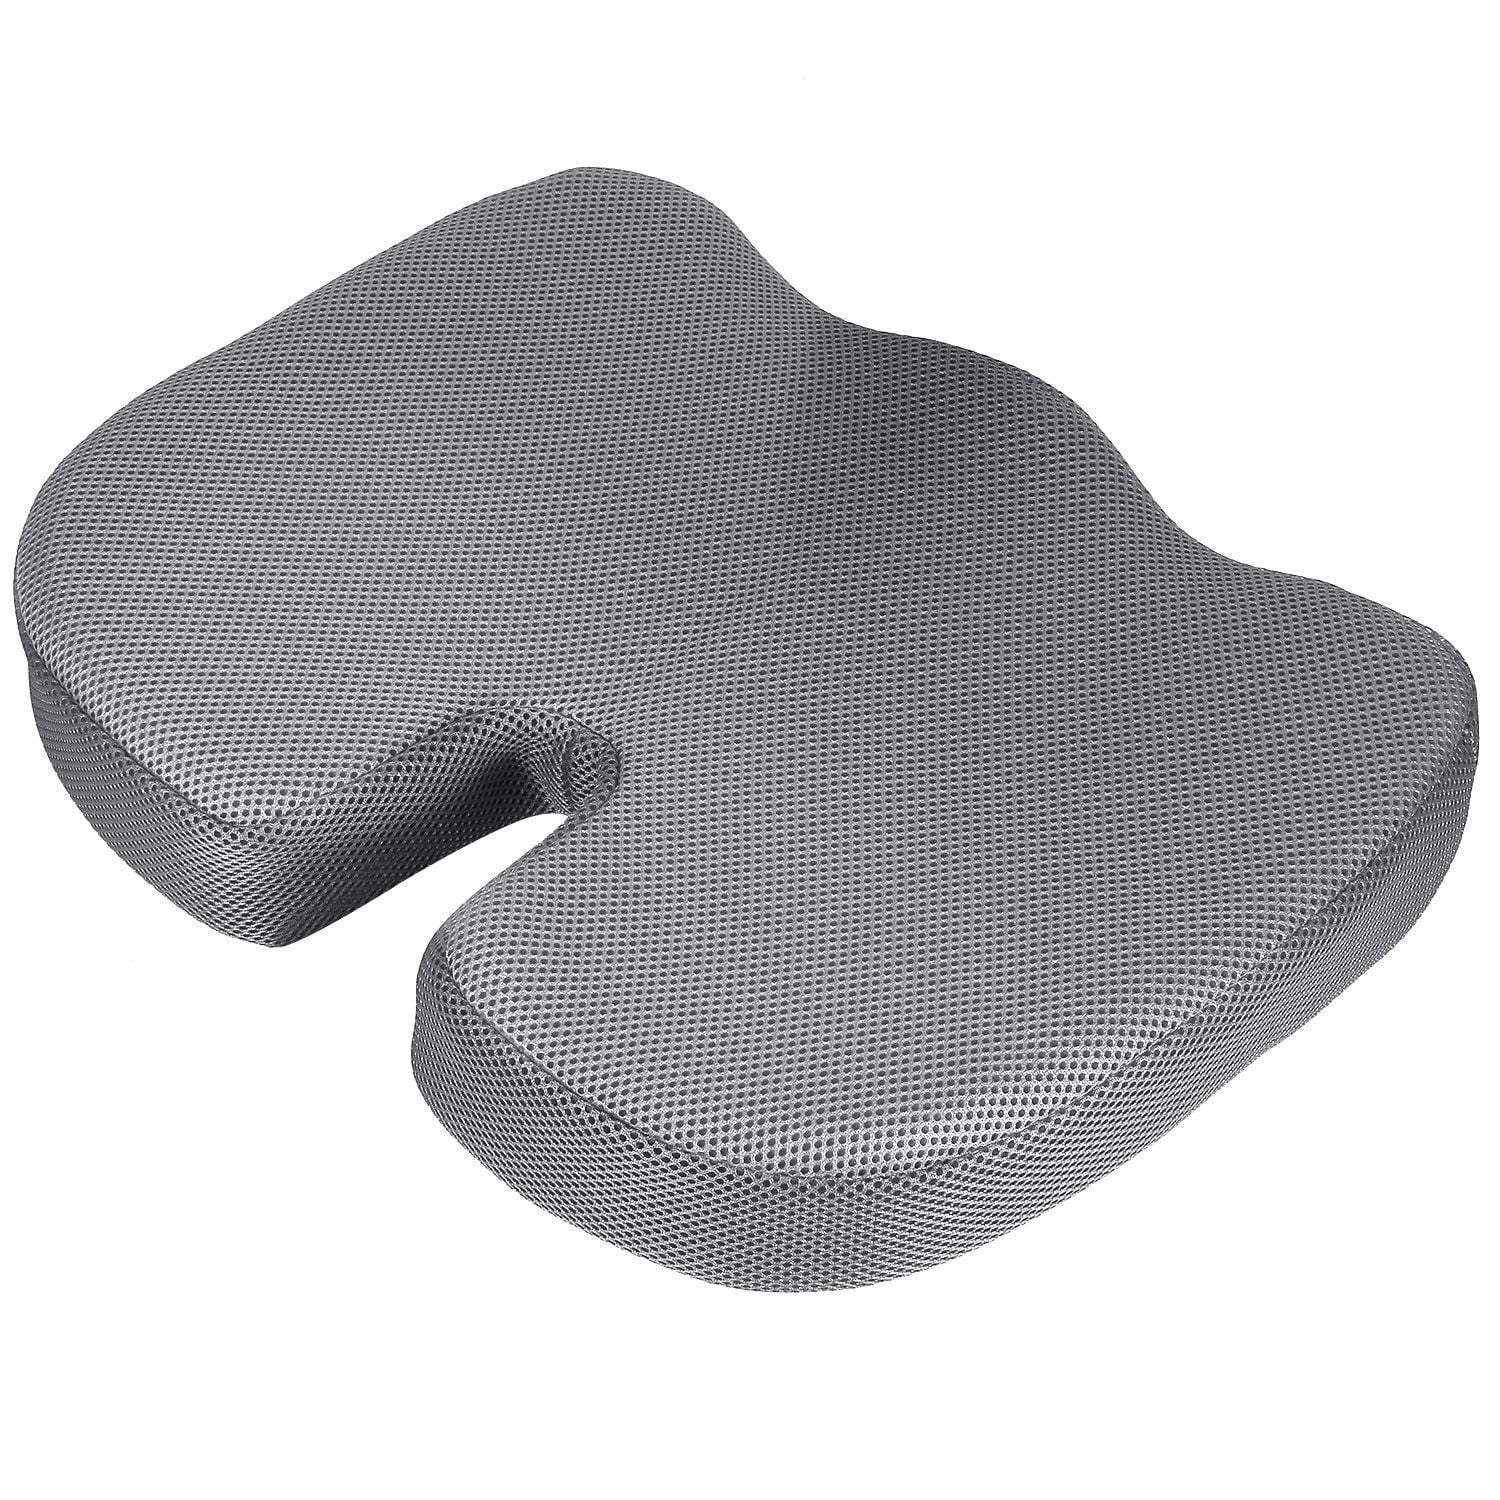 OFFICEGYM Orthopedic Coccyx Seat Cushion: Premium Memory Foam Pillow for  Tailbone Pain & Back Support. Ergonomic & Travel Ready. Premium Hip & Back